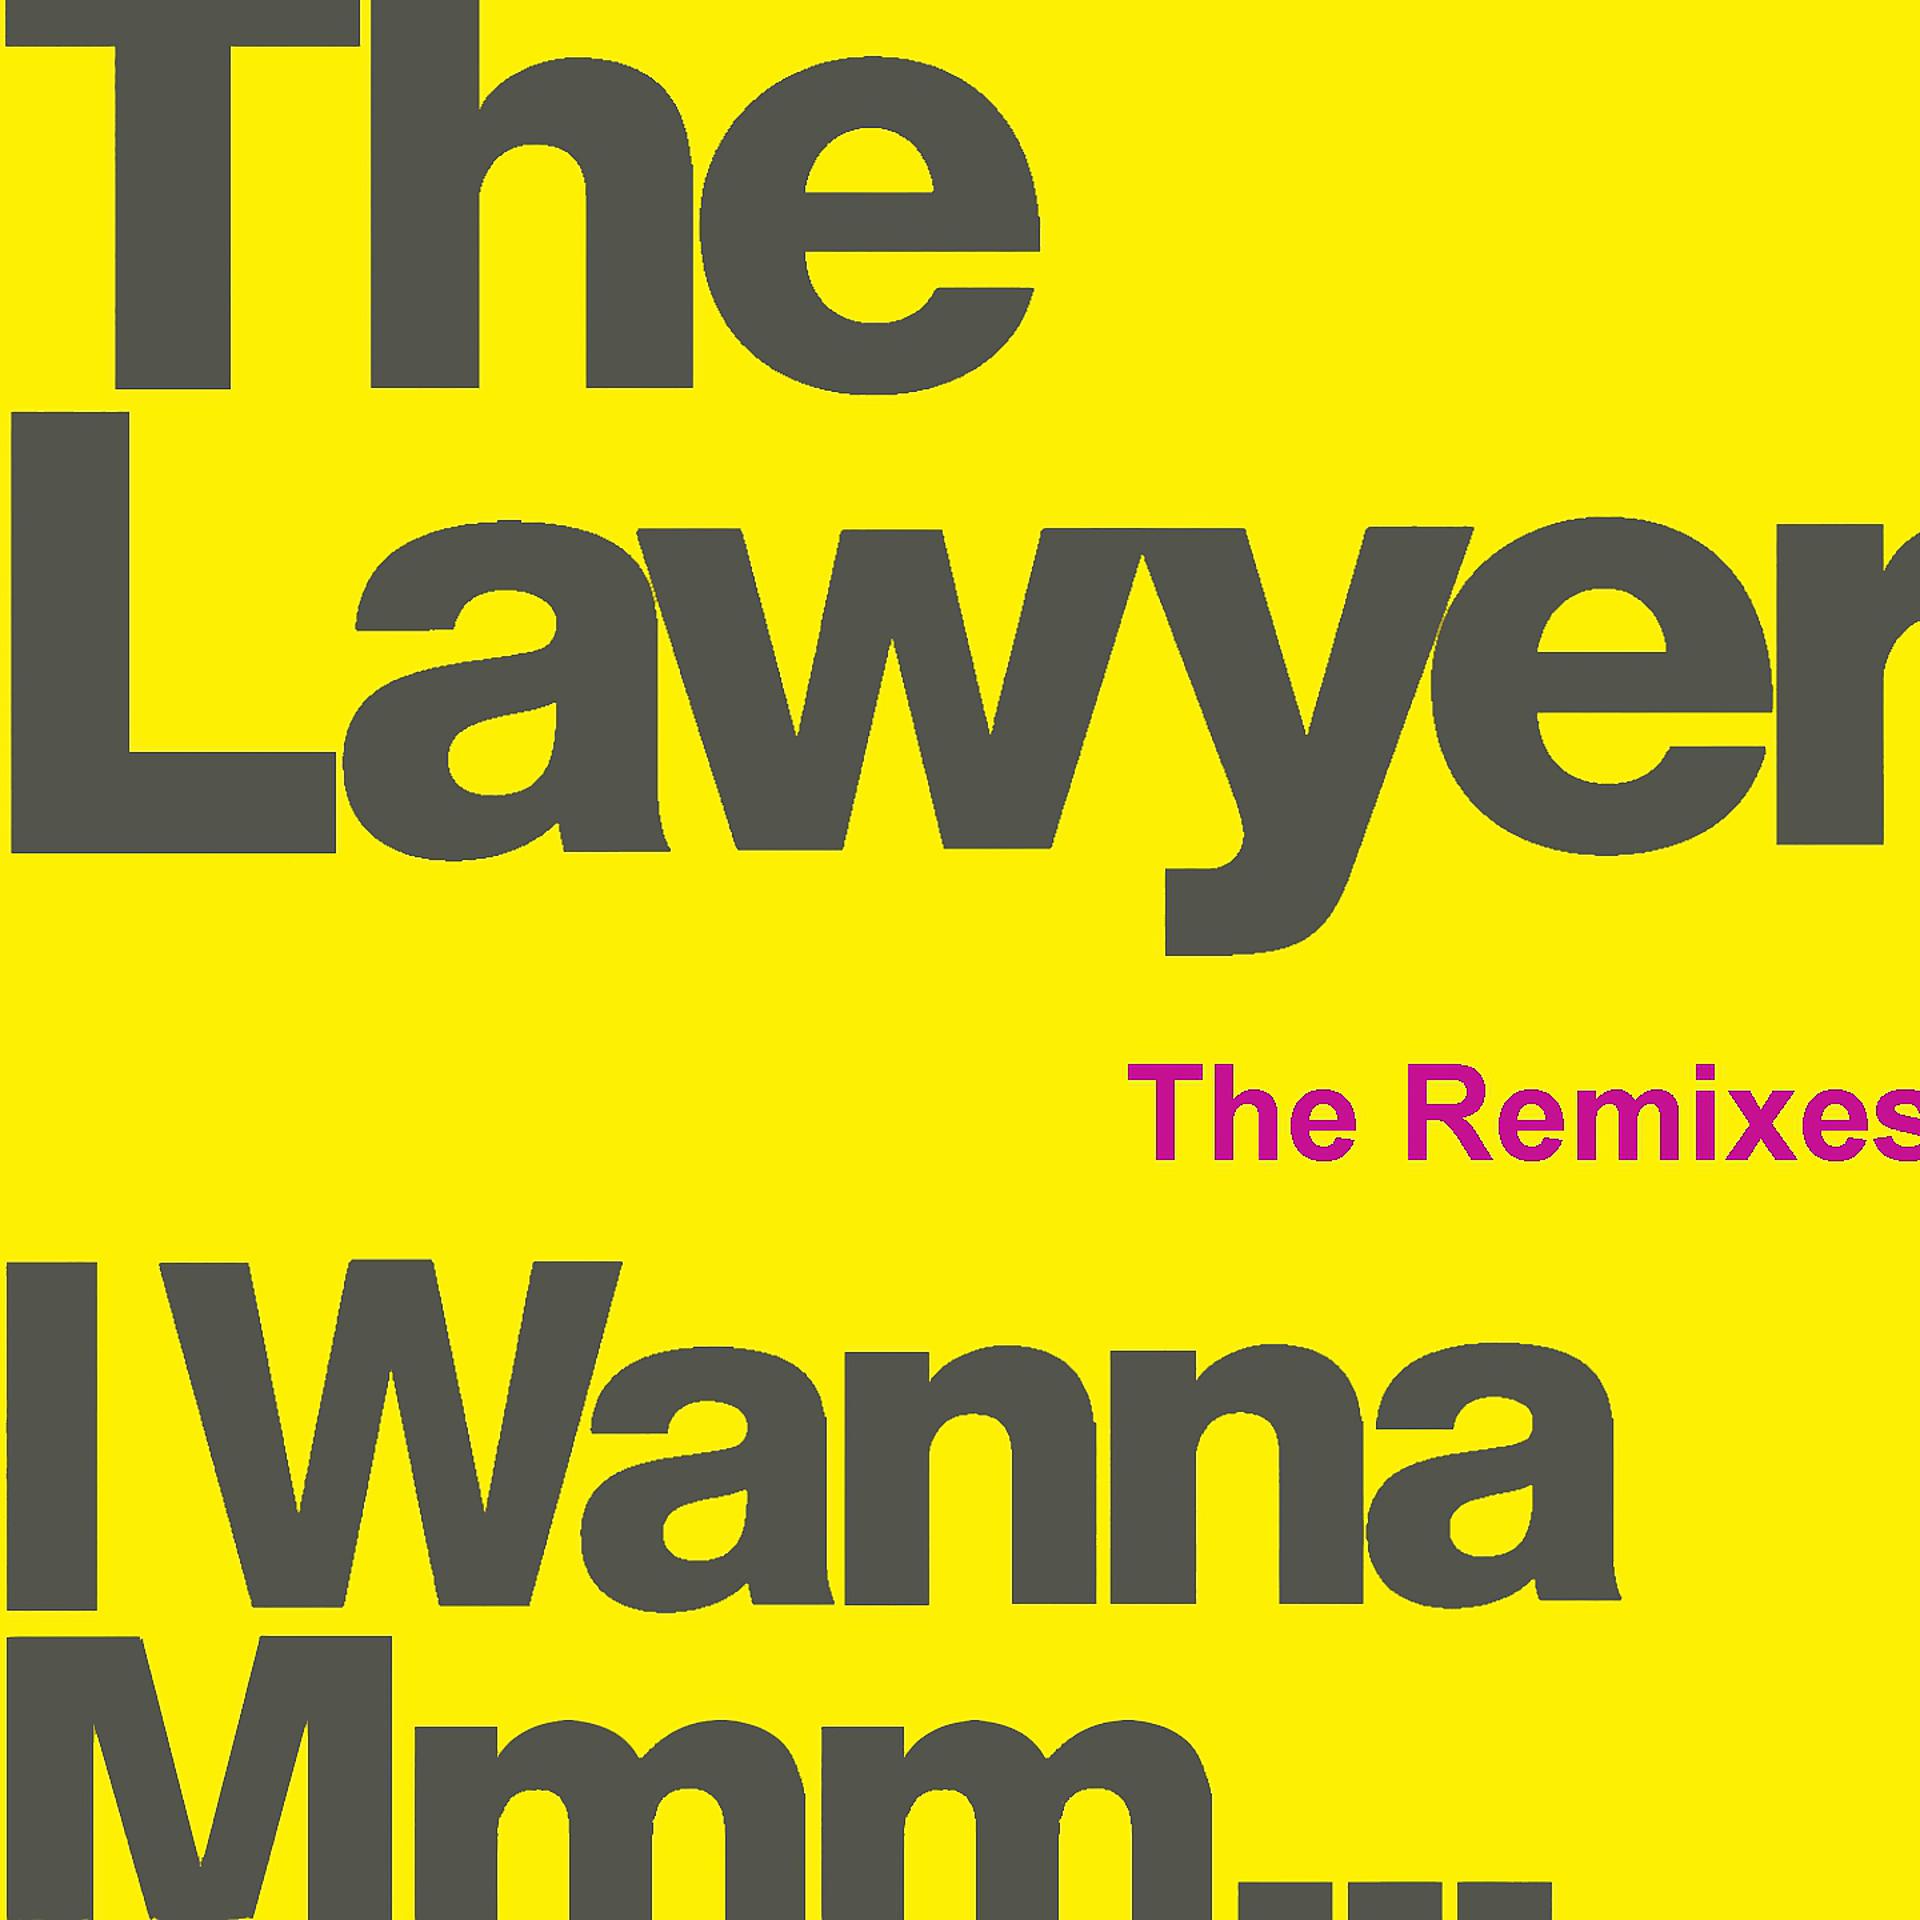 Wanna mmm песня. I wanna mmm. The lawyer i wanna mmm. I wanna mmm исполнитель. The lawyer певец i wanna mmm.